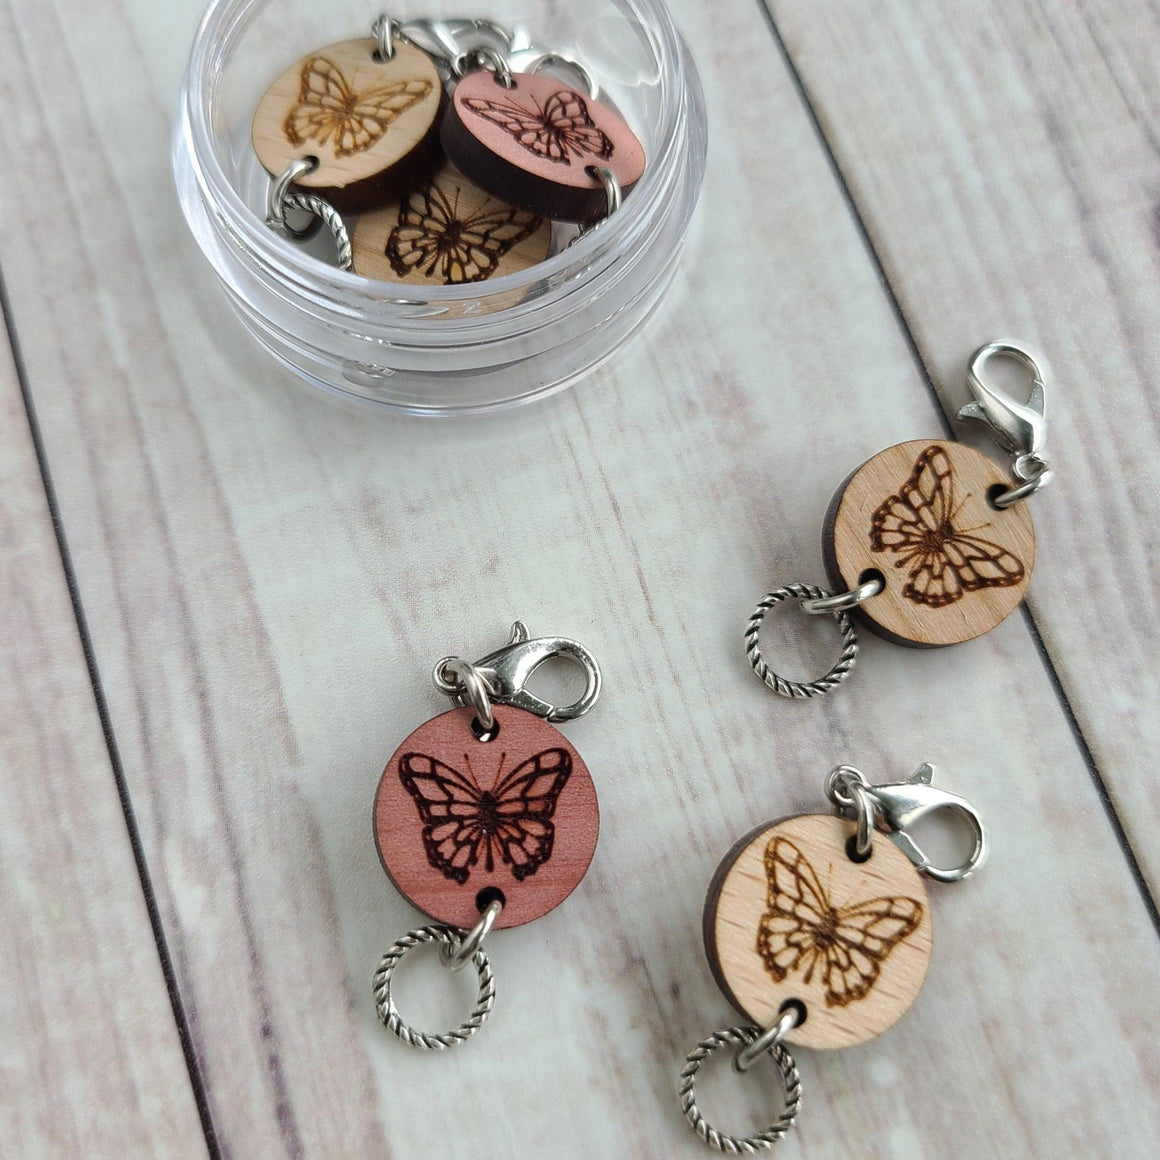 Butterfly Stitch Marker and Progress Keeper Earrings - Cedar, Cherry, and Beech